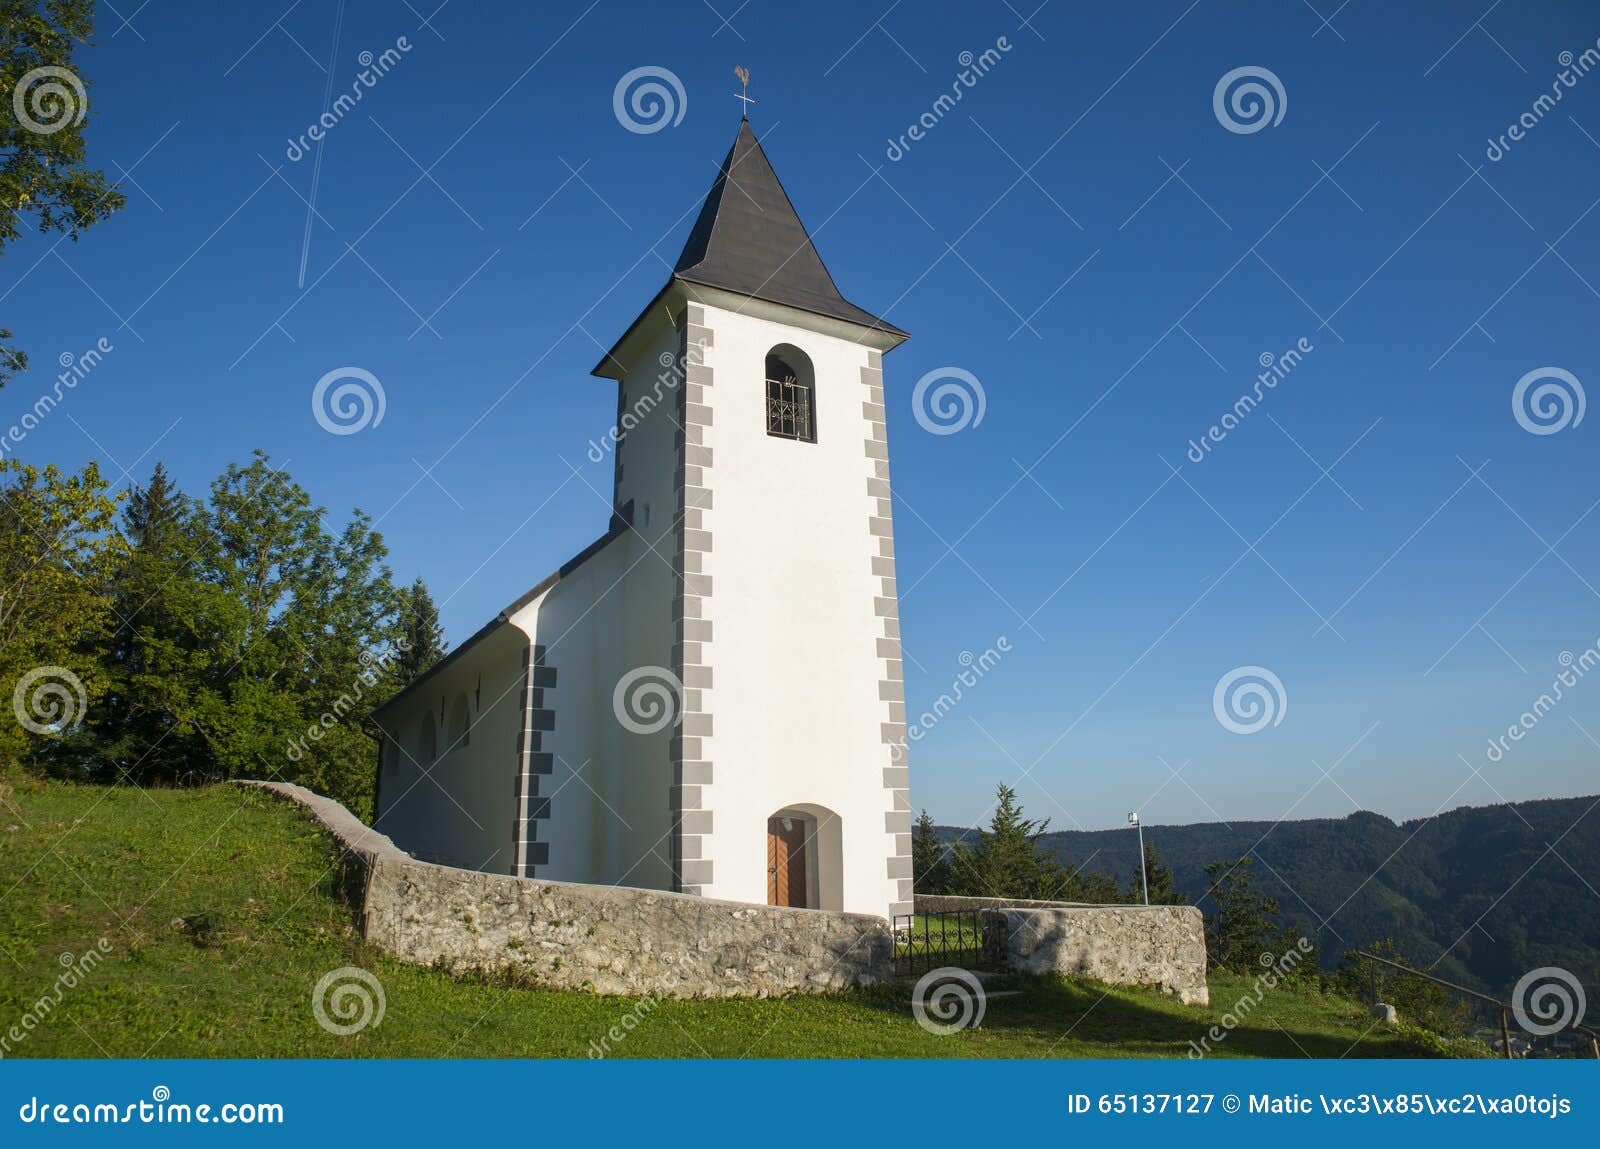 st. vid church, tuhinj valley, slovenia